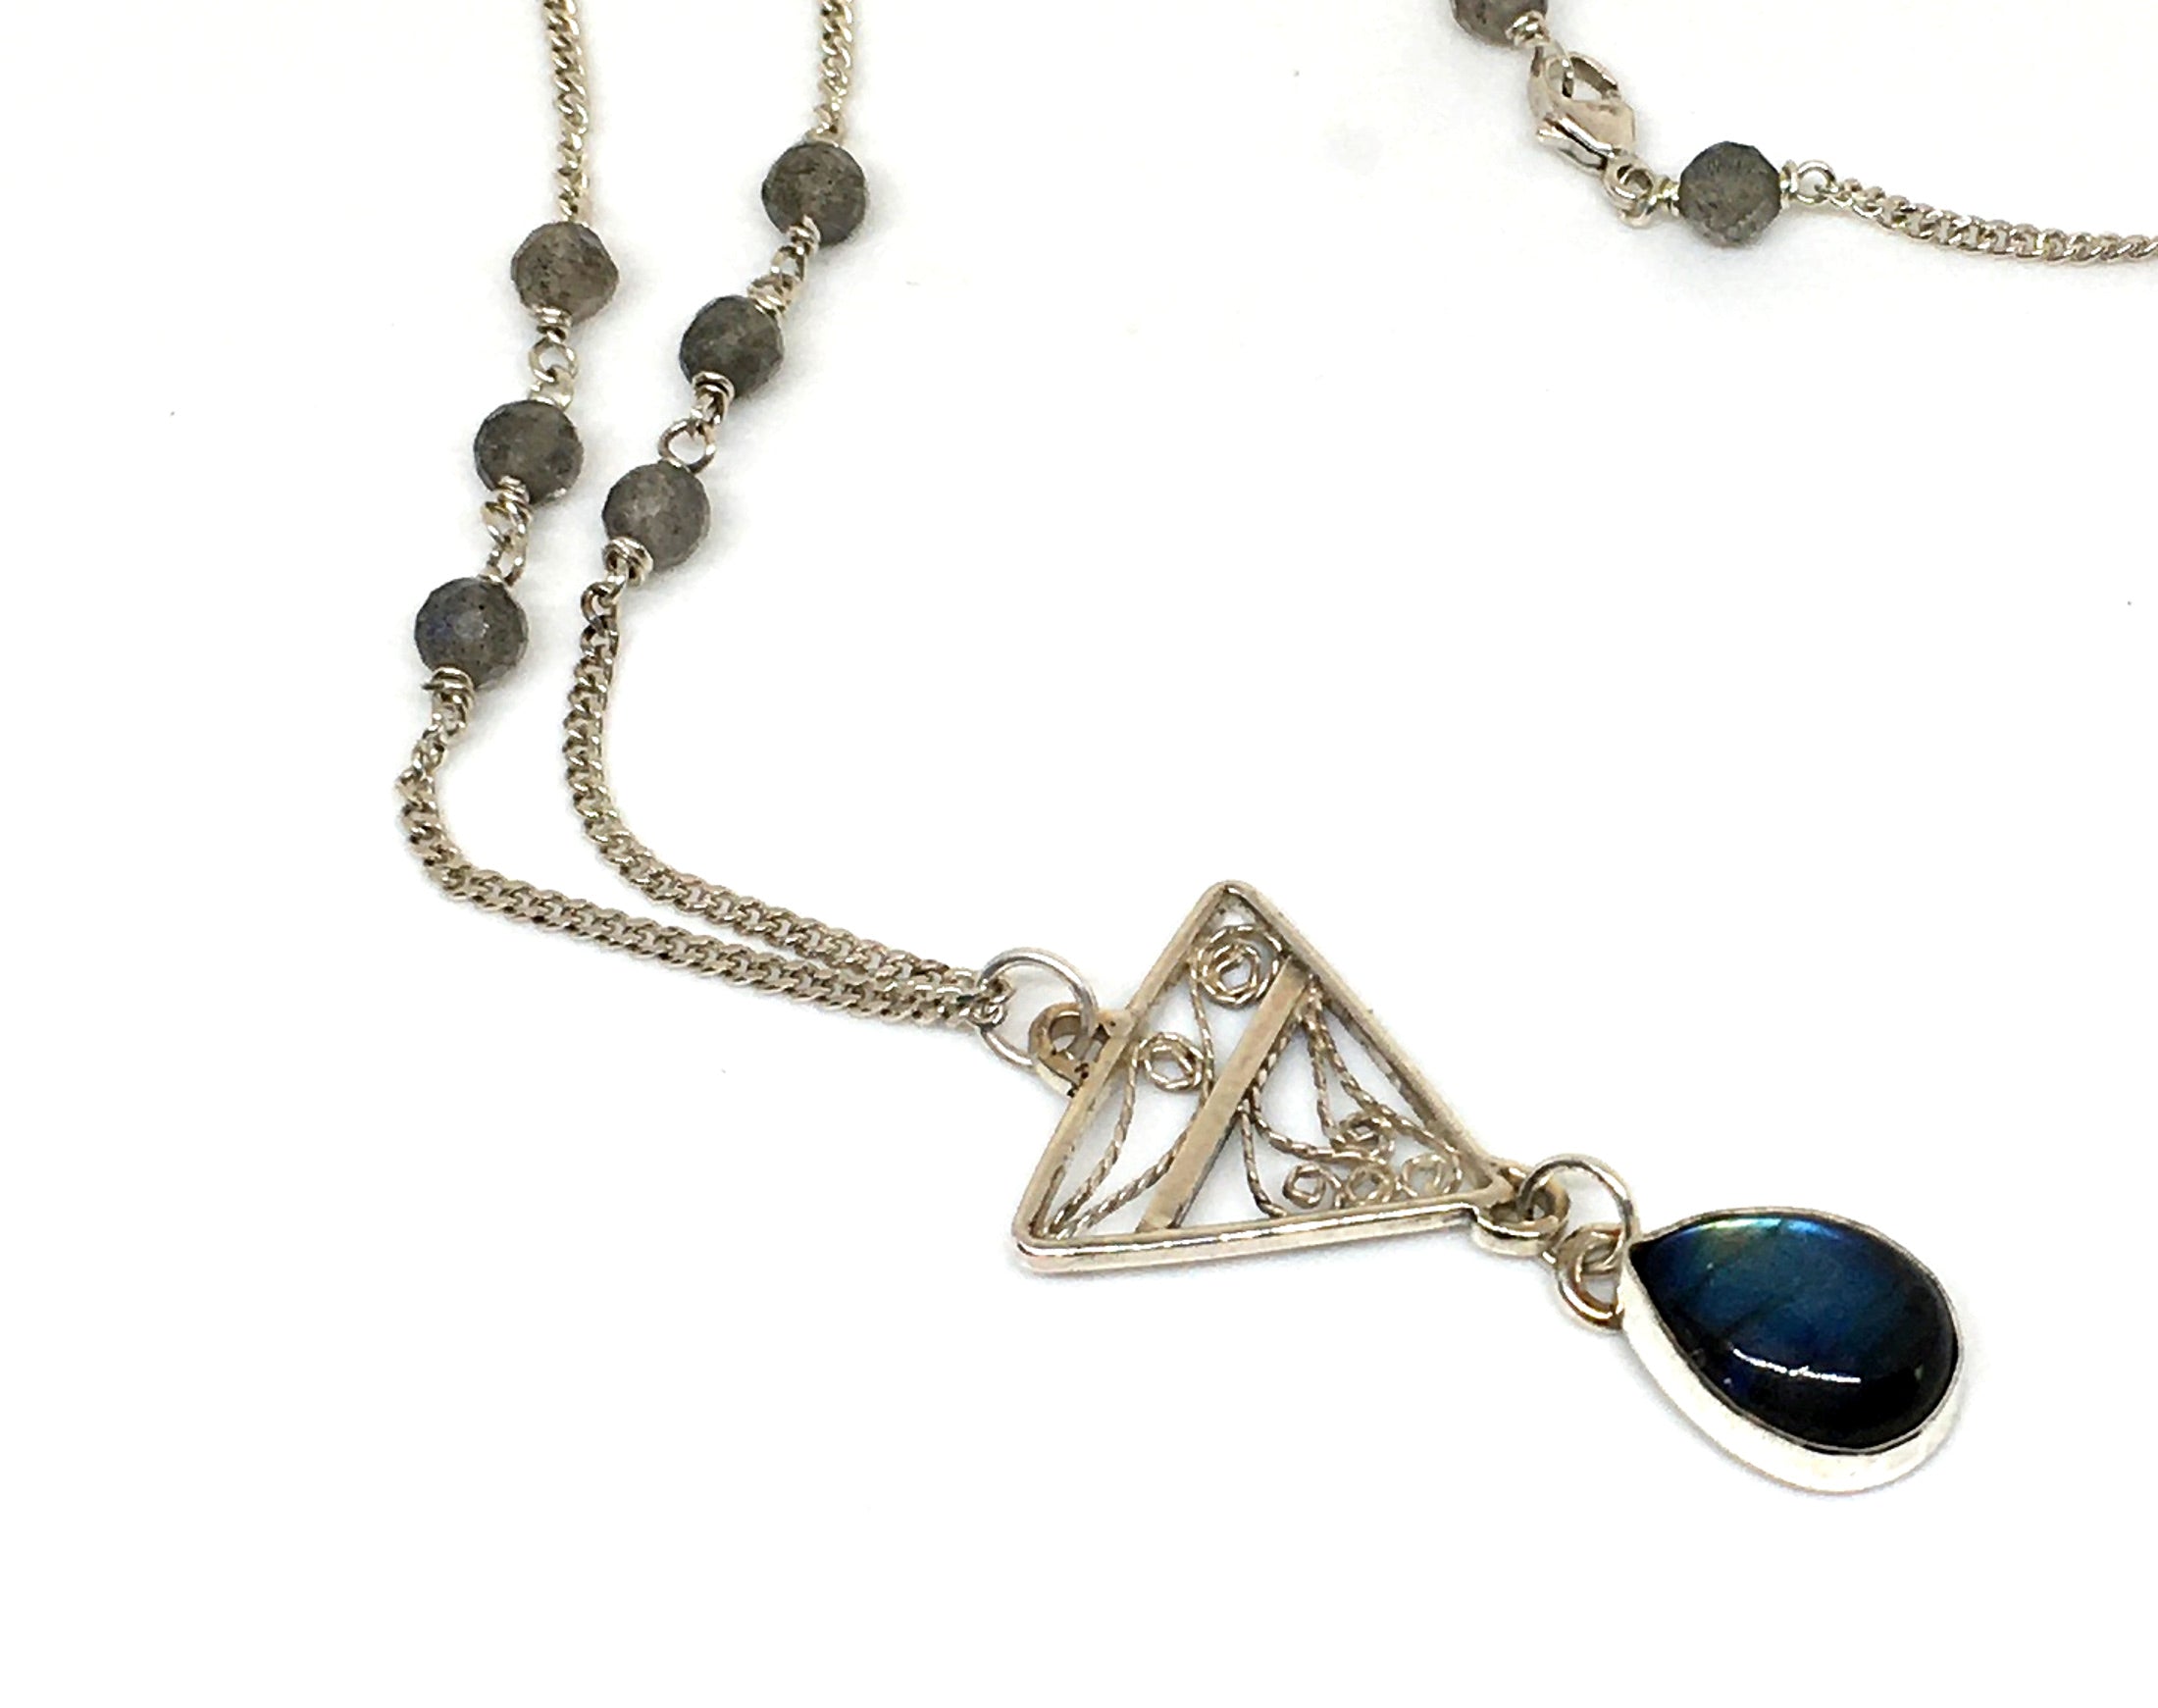 Handmade Filigree Pendant Necklace with Labradorite